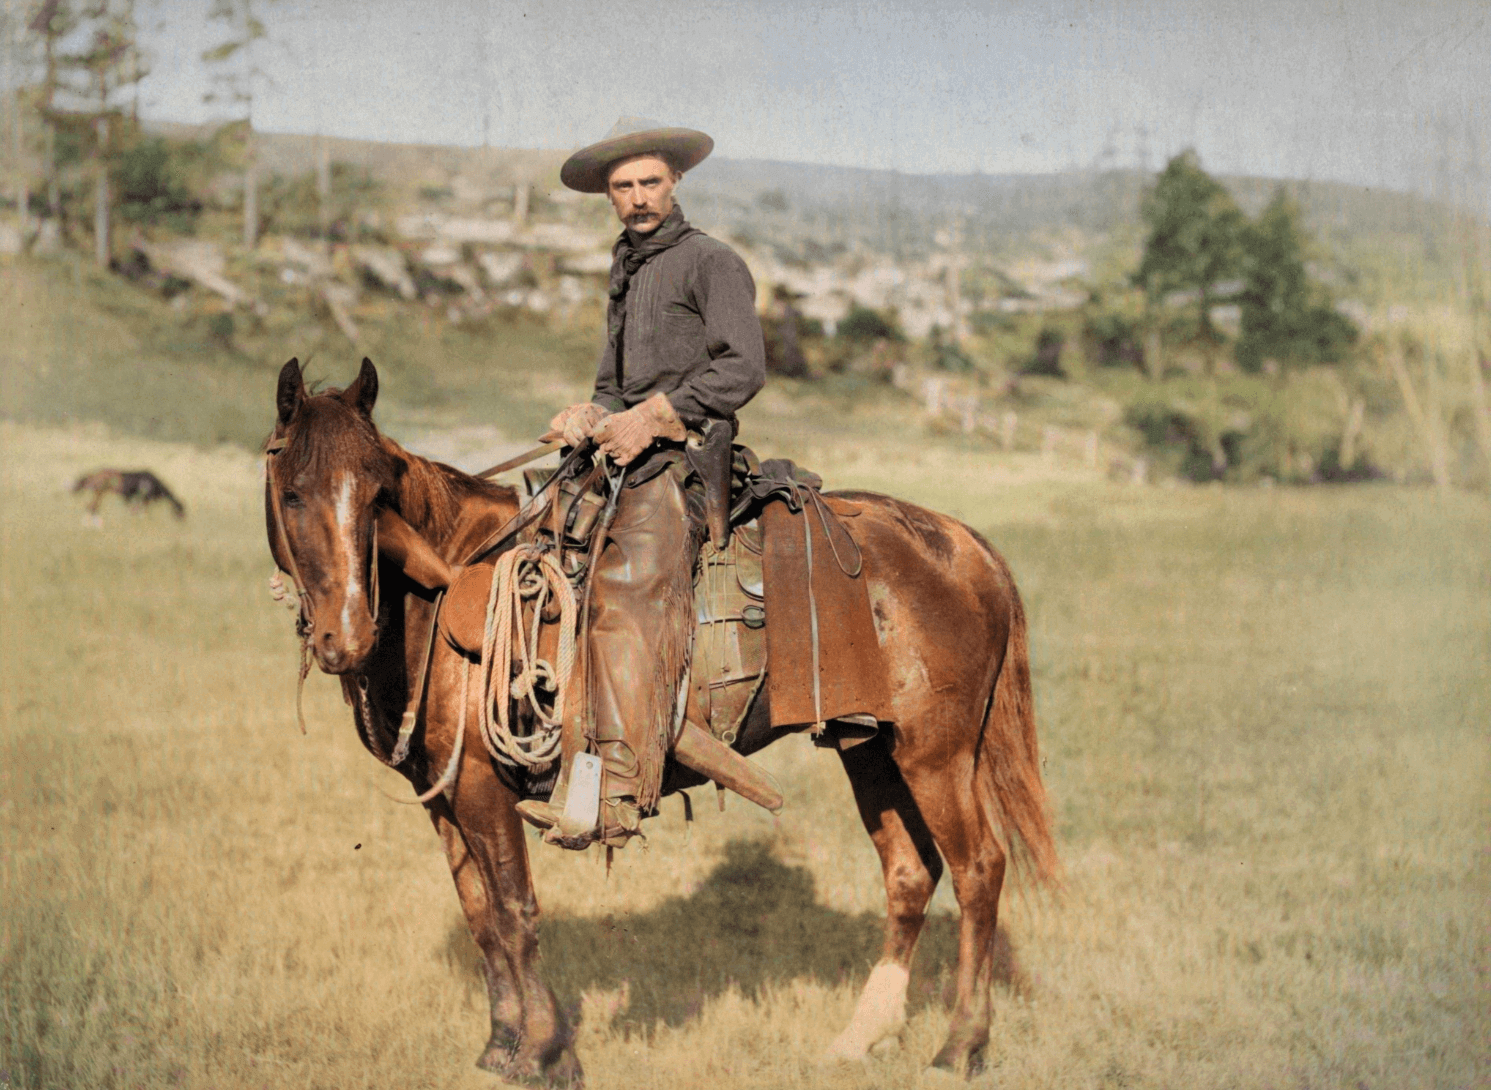 The Cow Boy – Sturgis, Dakota Territory (now South Dakota), 1888. Photographer: John C. H. Grabill, Library of Congress